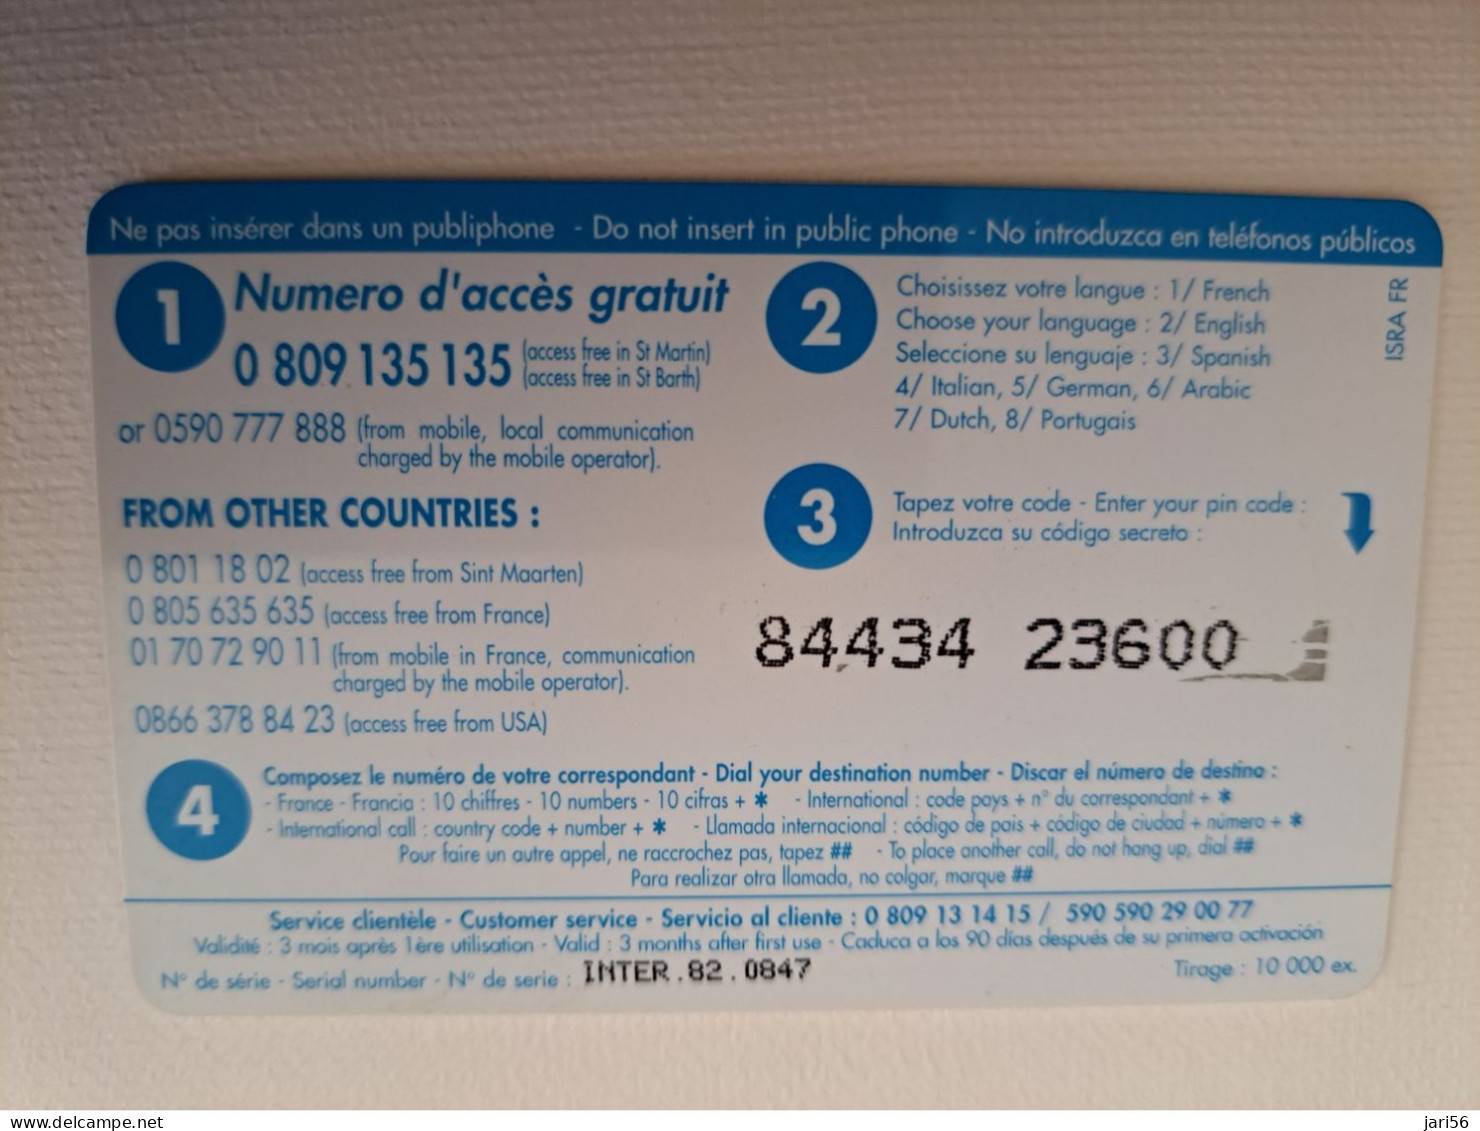 ST MARTIN / INTERCARD  3 EURO    / CASE AGREEMENT       NO 082  Fine Used Card    ** 15140** - Antilles (Françaises)